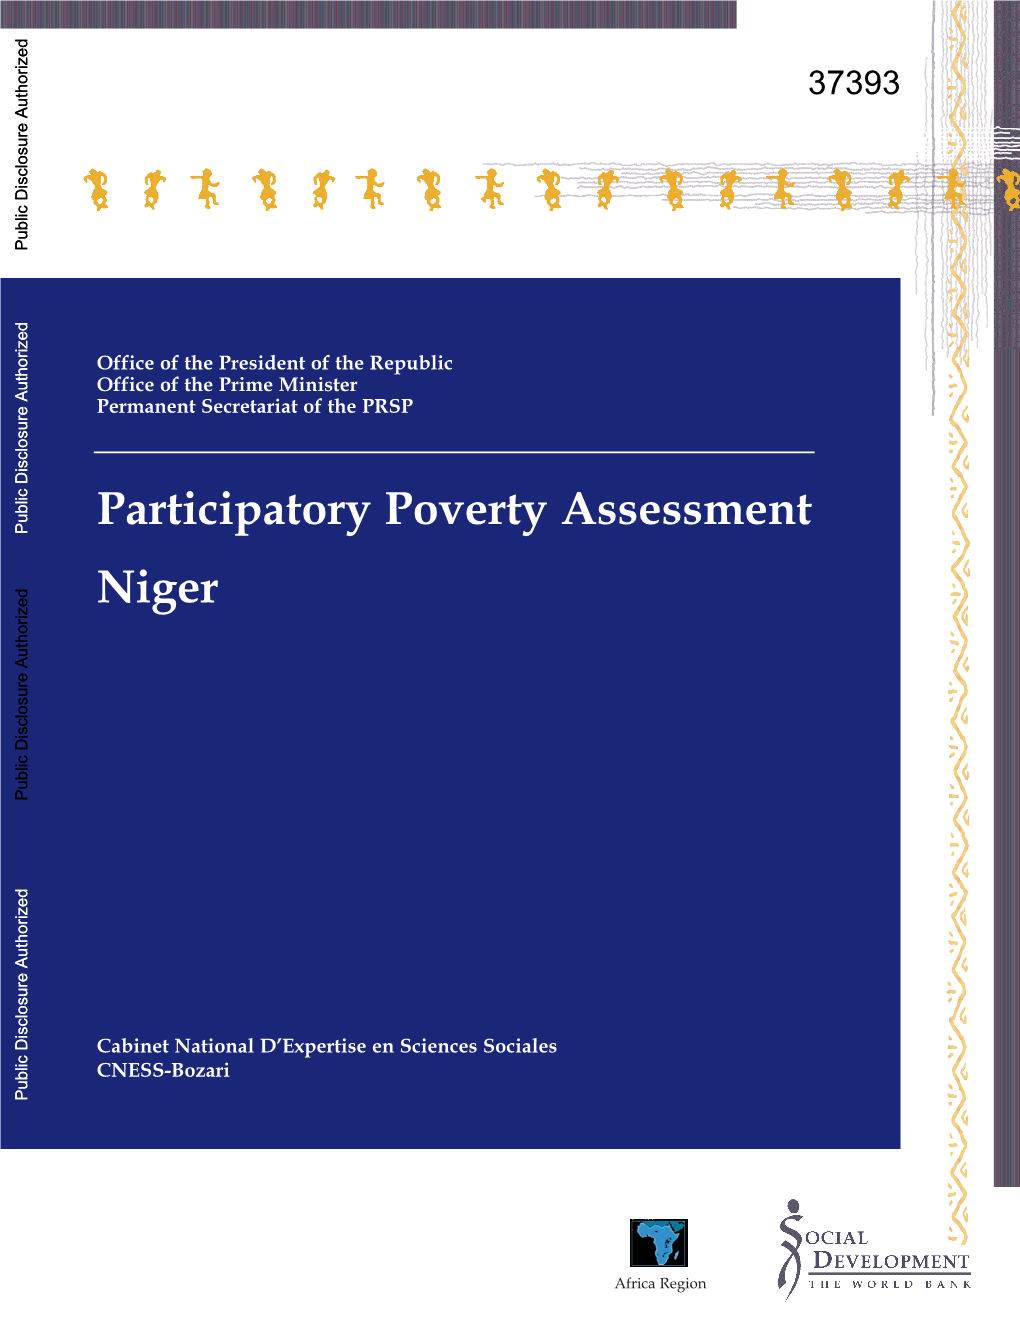 Participatory Poverty Assessment Niger Public Disclosure Authorized